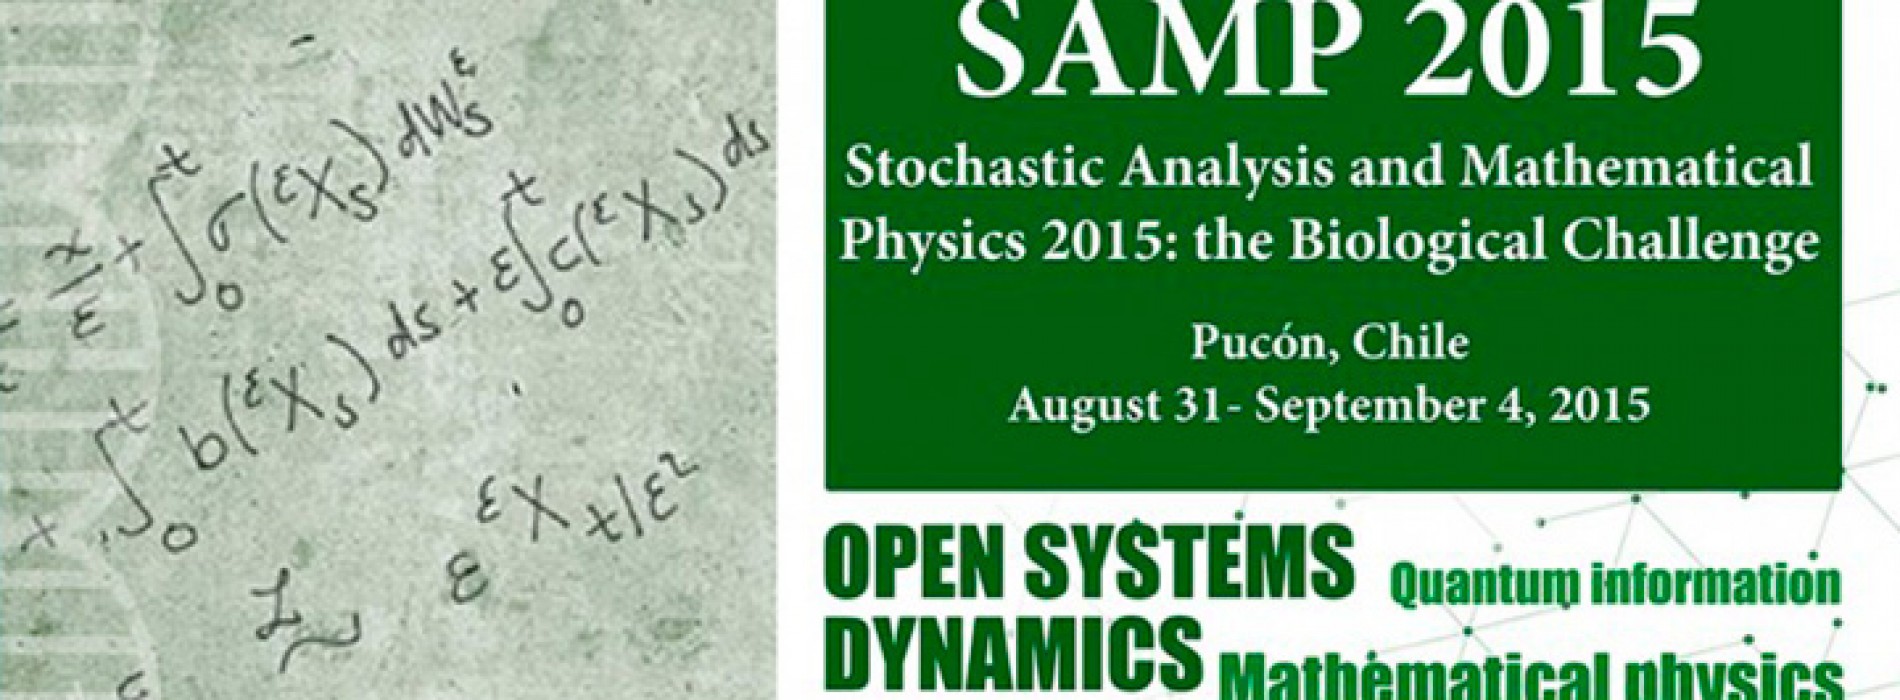 SAMP Stochastic Analysis and Mathematical Physics 2015